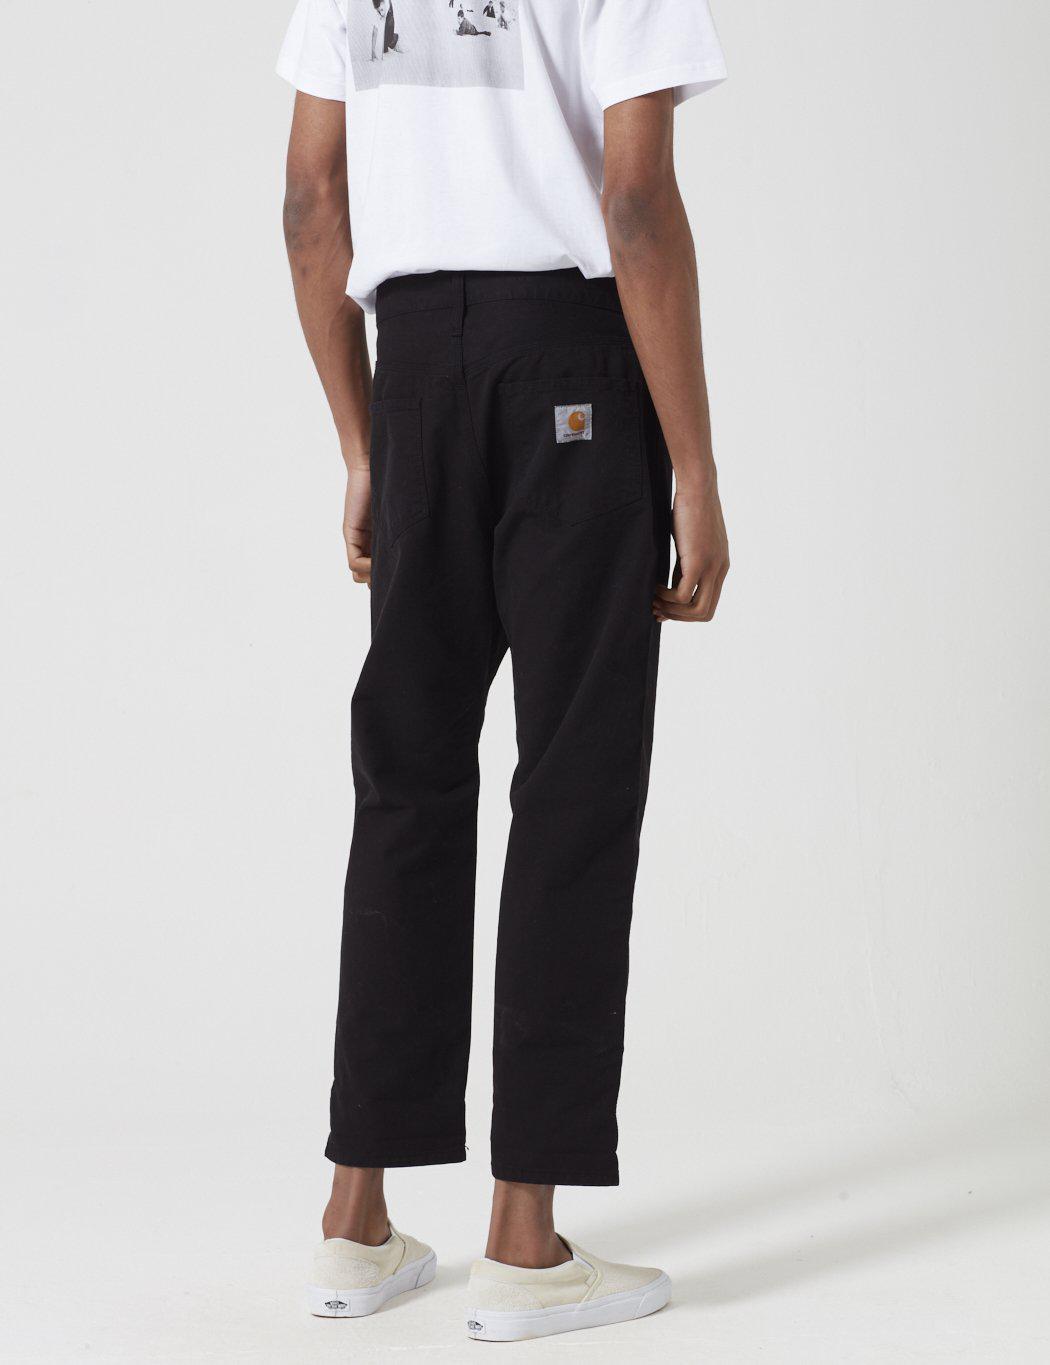 Carhartt Cotton Toledo Pant Trousers (regular Fit) in Black for Men - Lyst